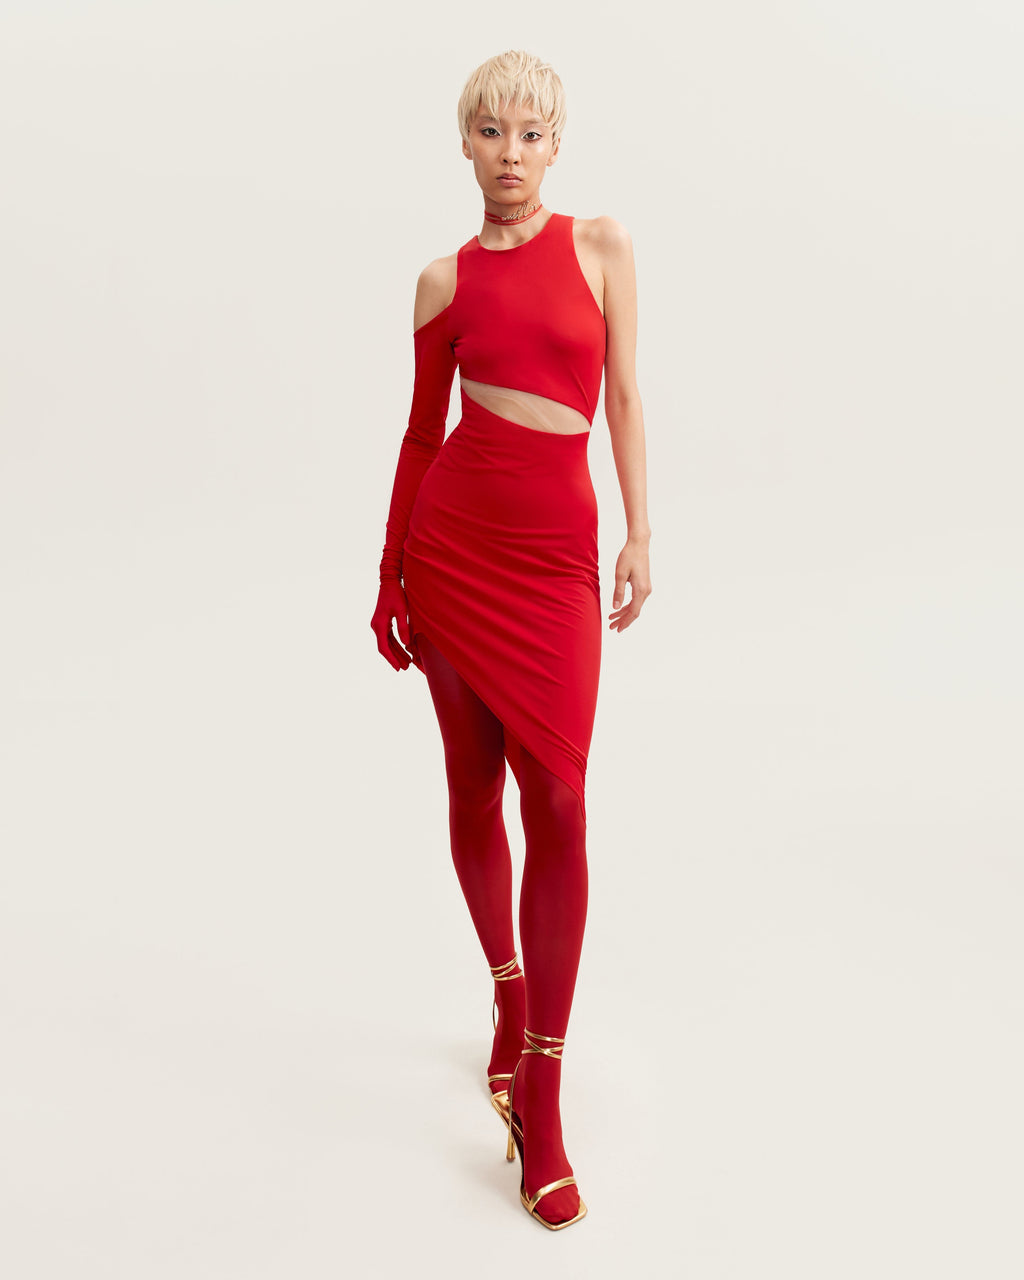 Jaw-dropping asymmetric red midi dress, Xo Xo